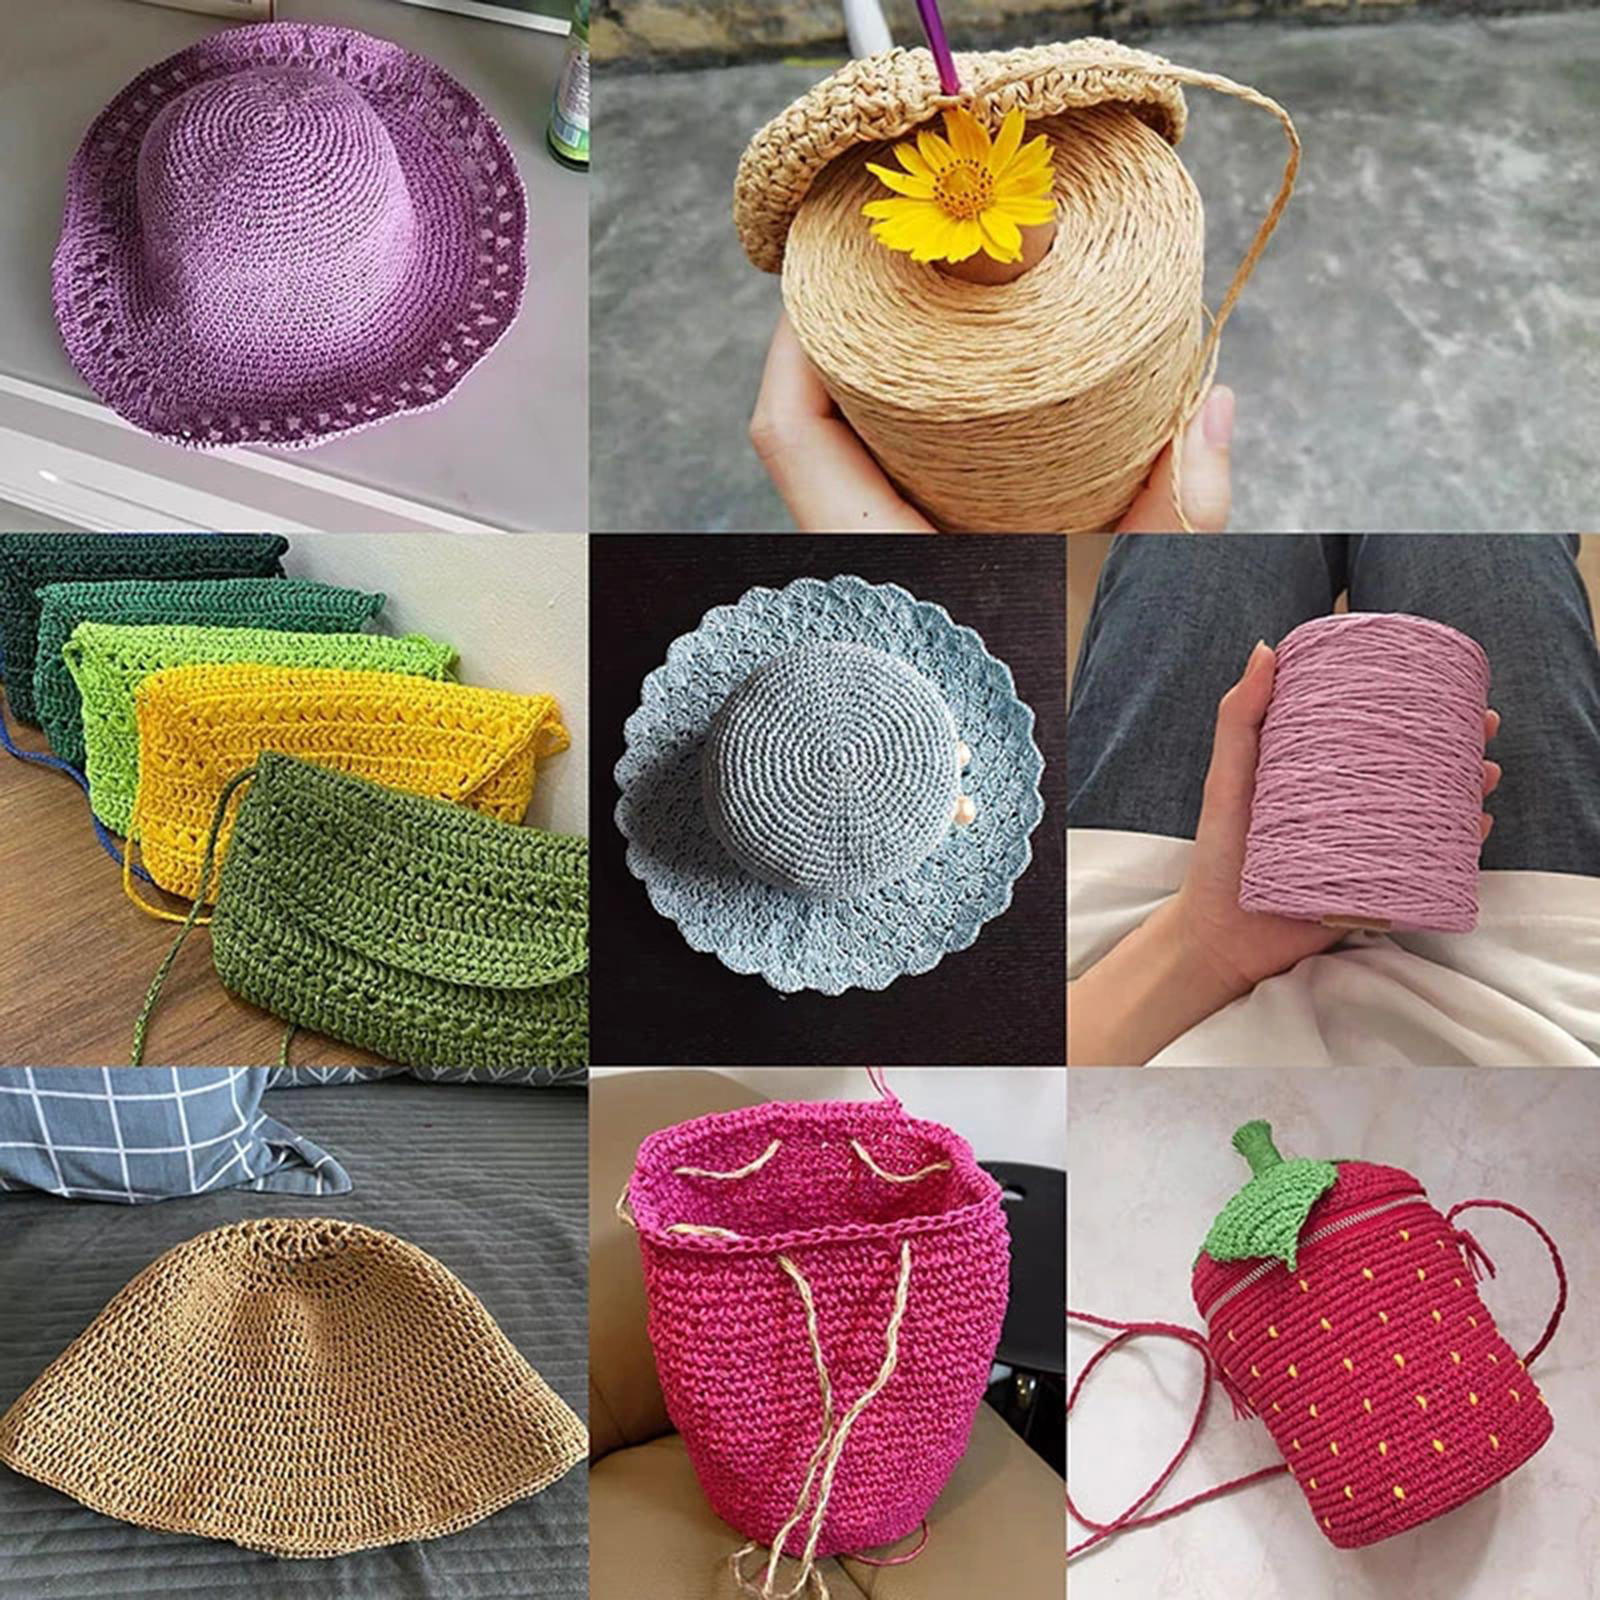 Naturegr 1 Roll Raffia Yarn Decorative Widely Applied Wrapping Gift Raffia  Straw Packaging Paper Yarn for DIY 